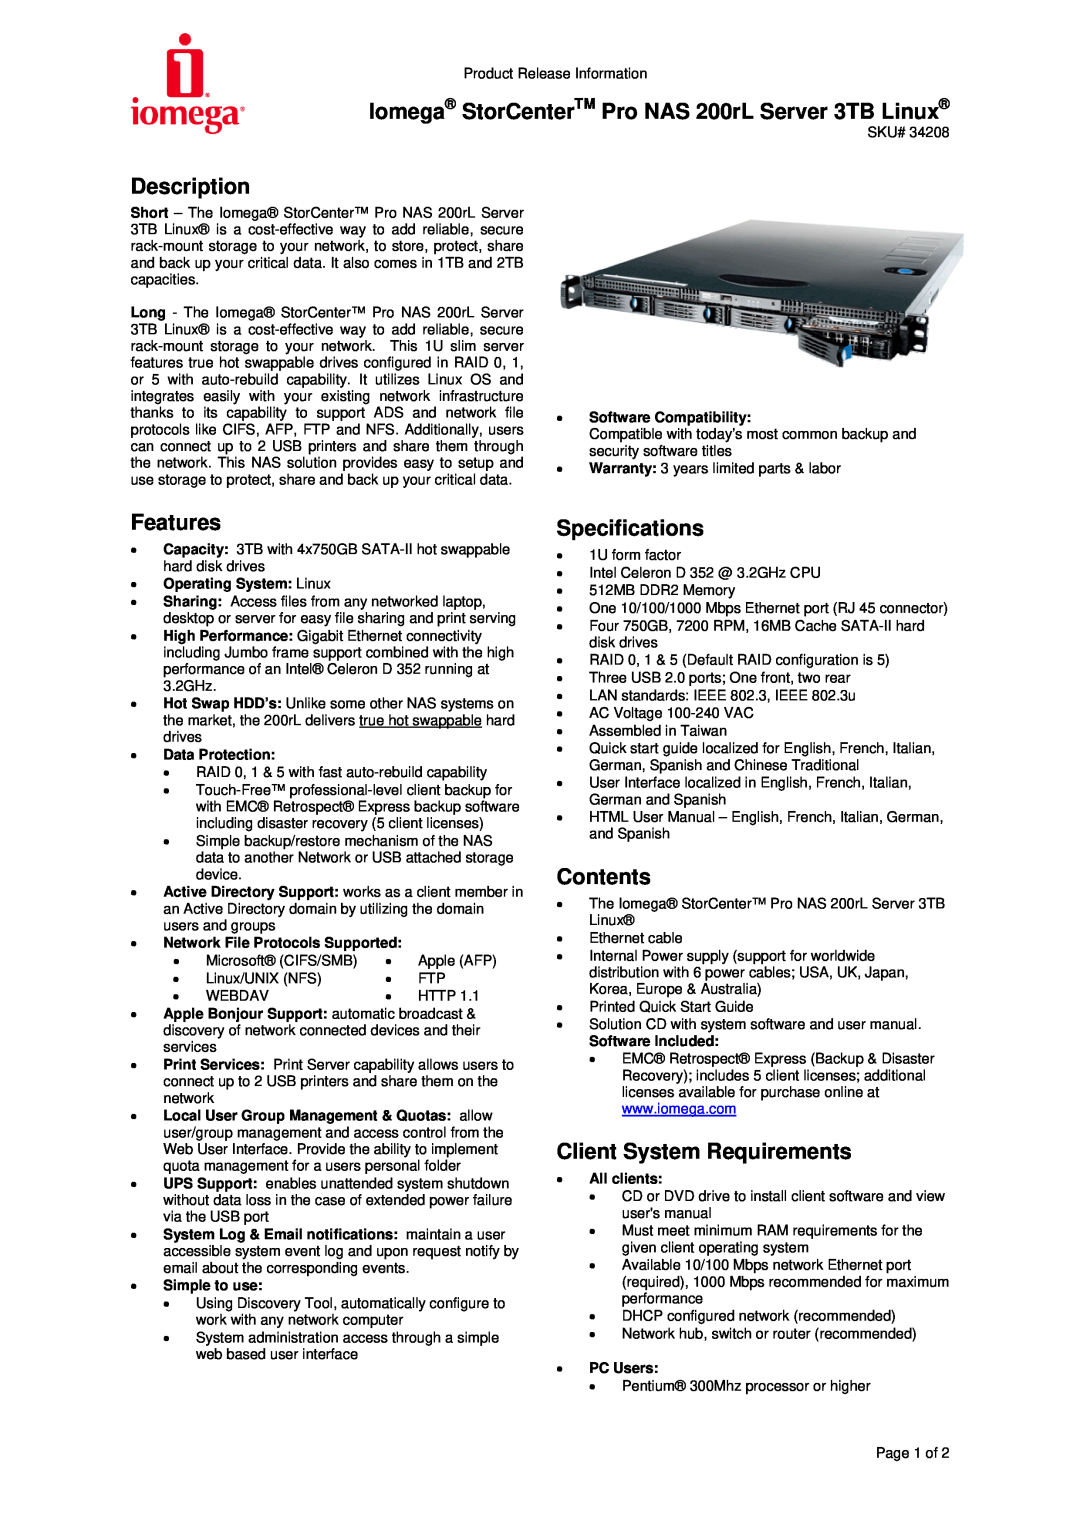 Iomega specifications Iomega StorCenterTM Pro NAS 200rL Server 3TB Linux, Description, Features, Specifications 